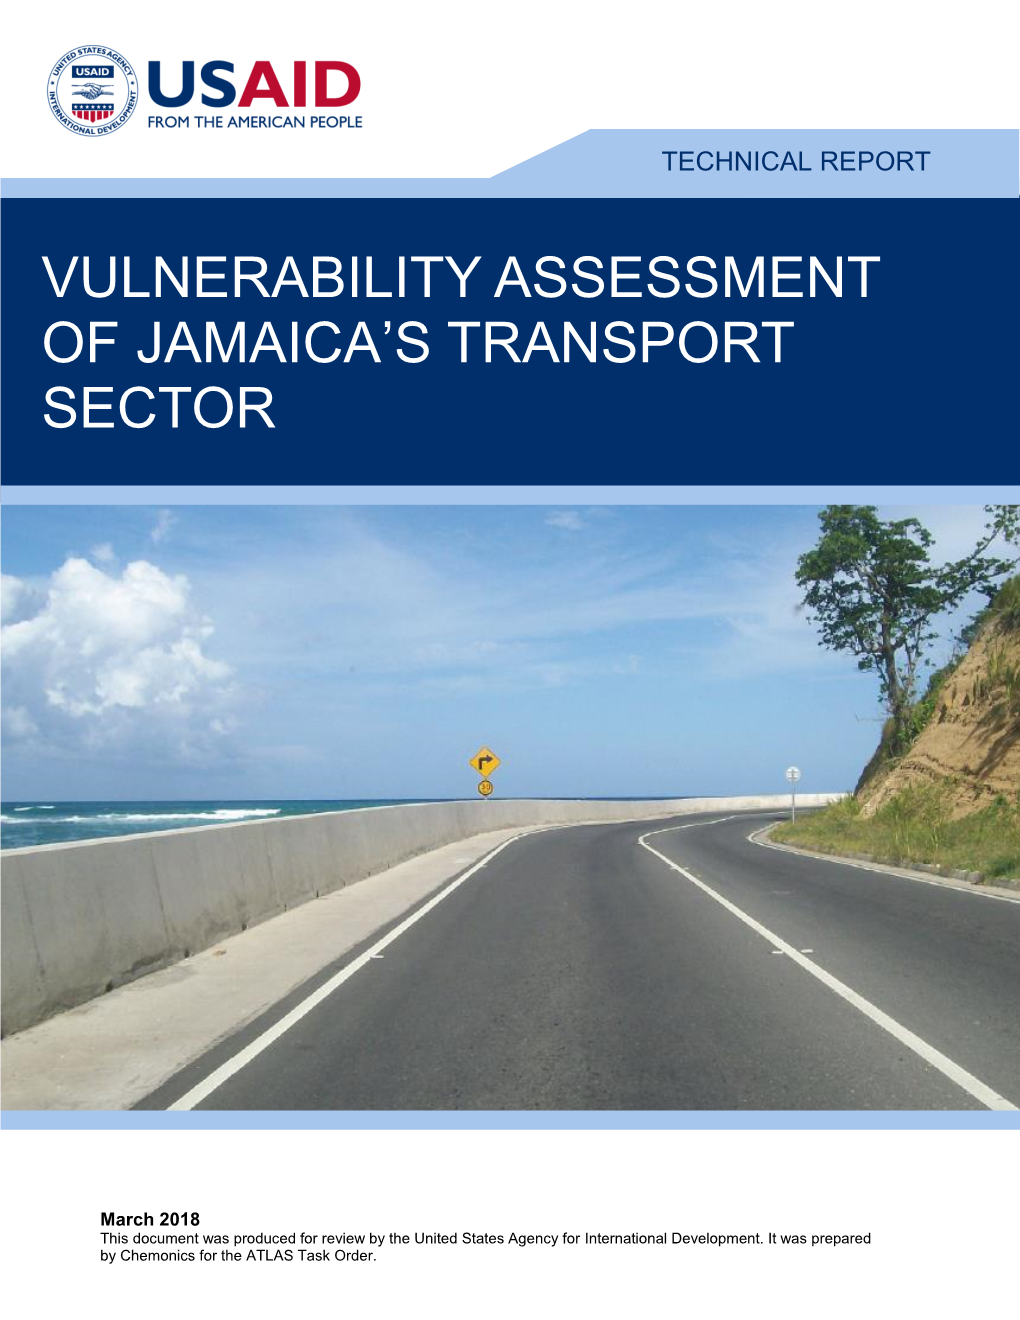 Vulnerability Assessment of Jamaica's Transport Sector